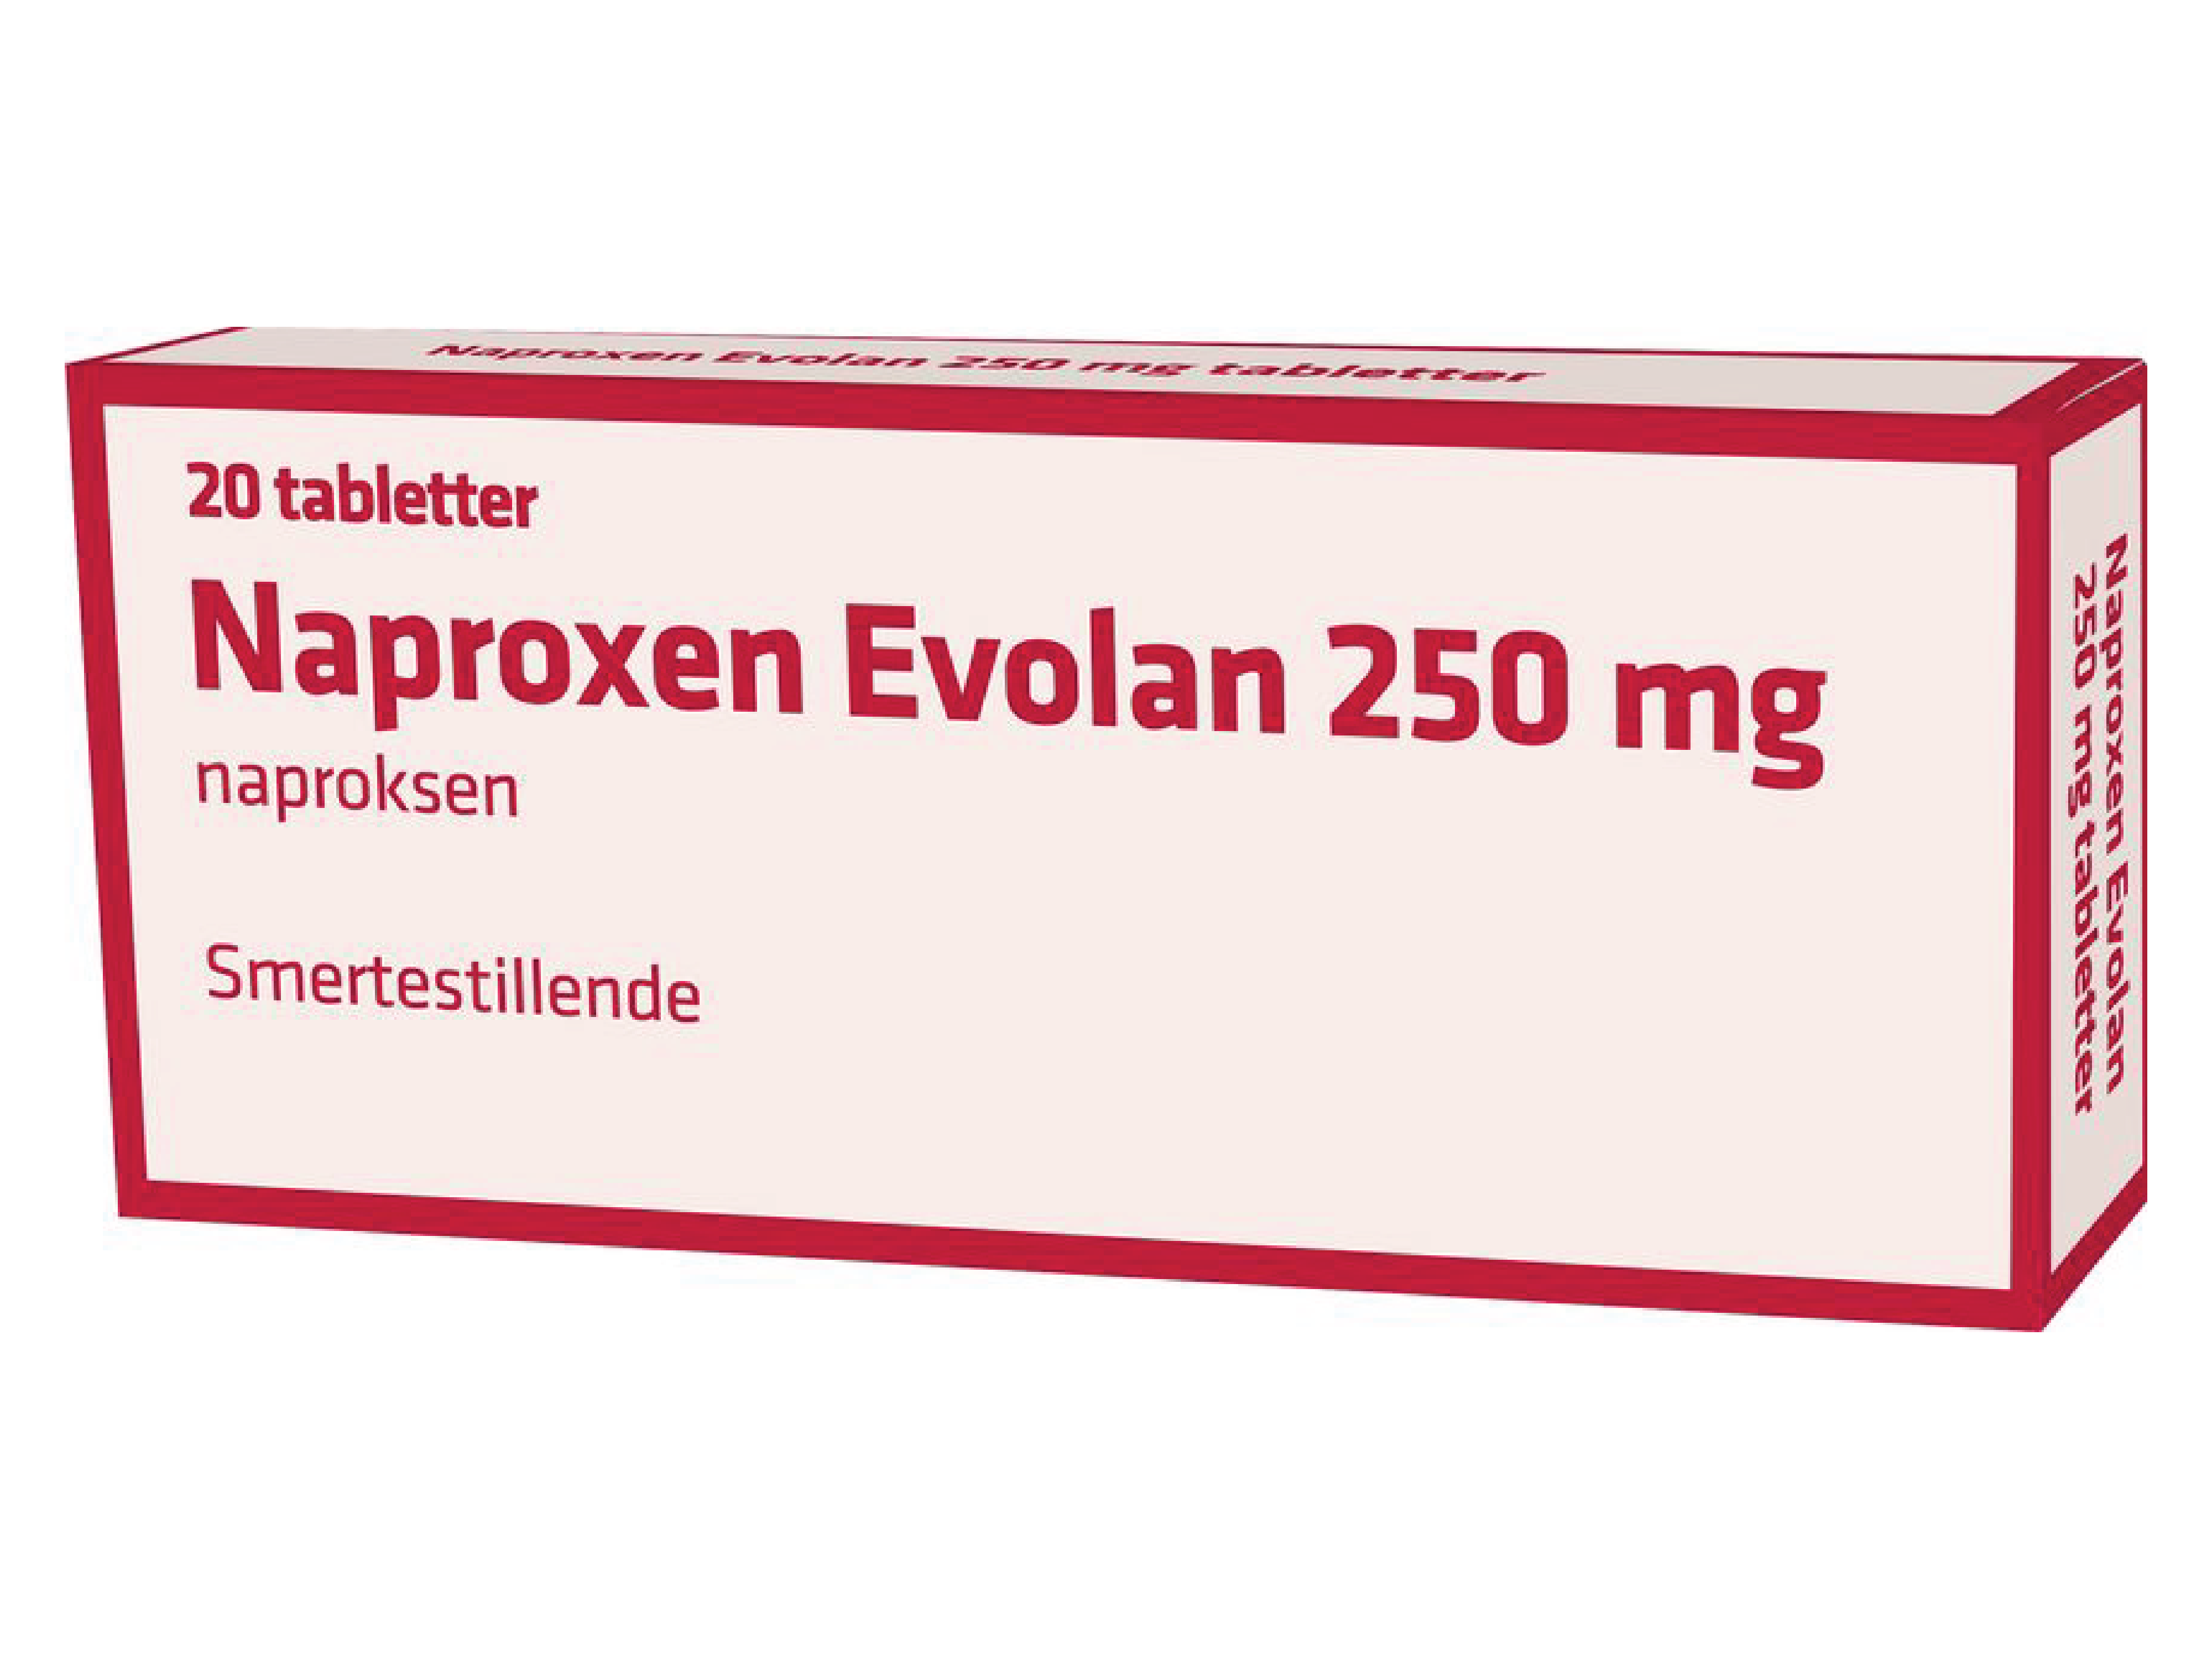 Naproxen Evolan 250 mg tabletter, 20 stk.